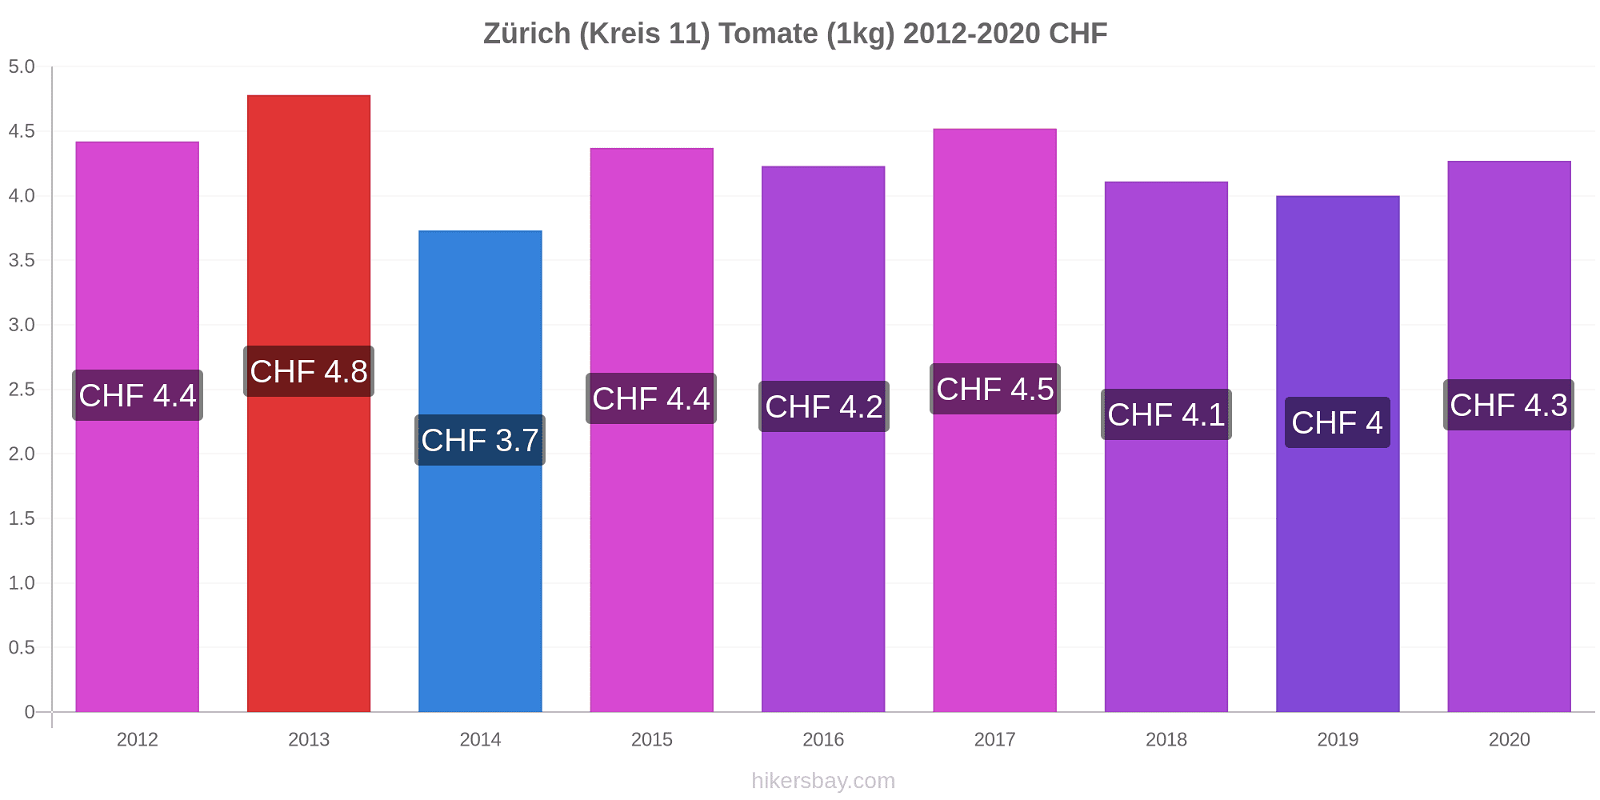 Zürich (Kreis 11) variação de preço Tomate (1kg) hikersbay.com